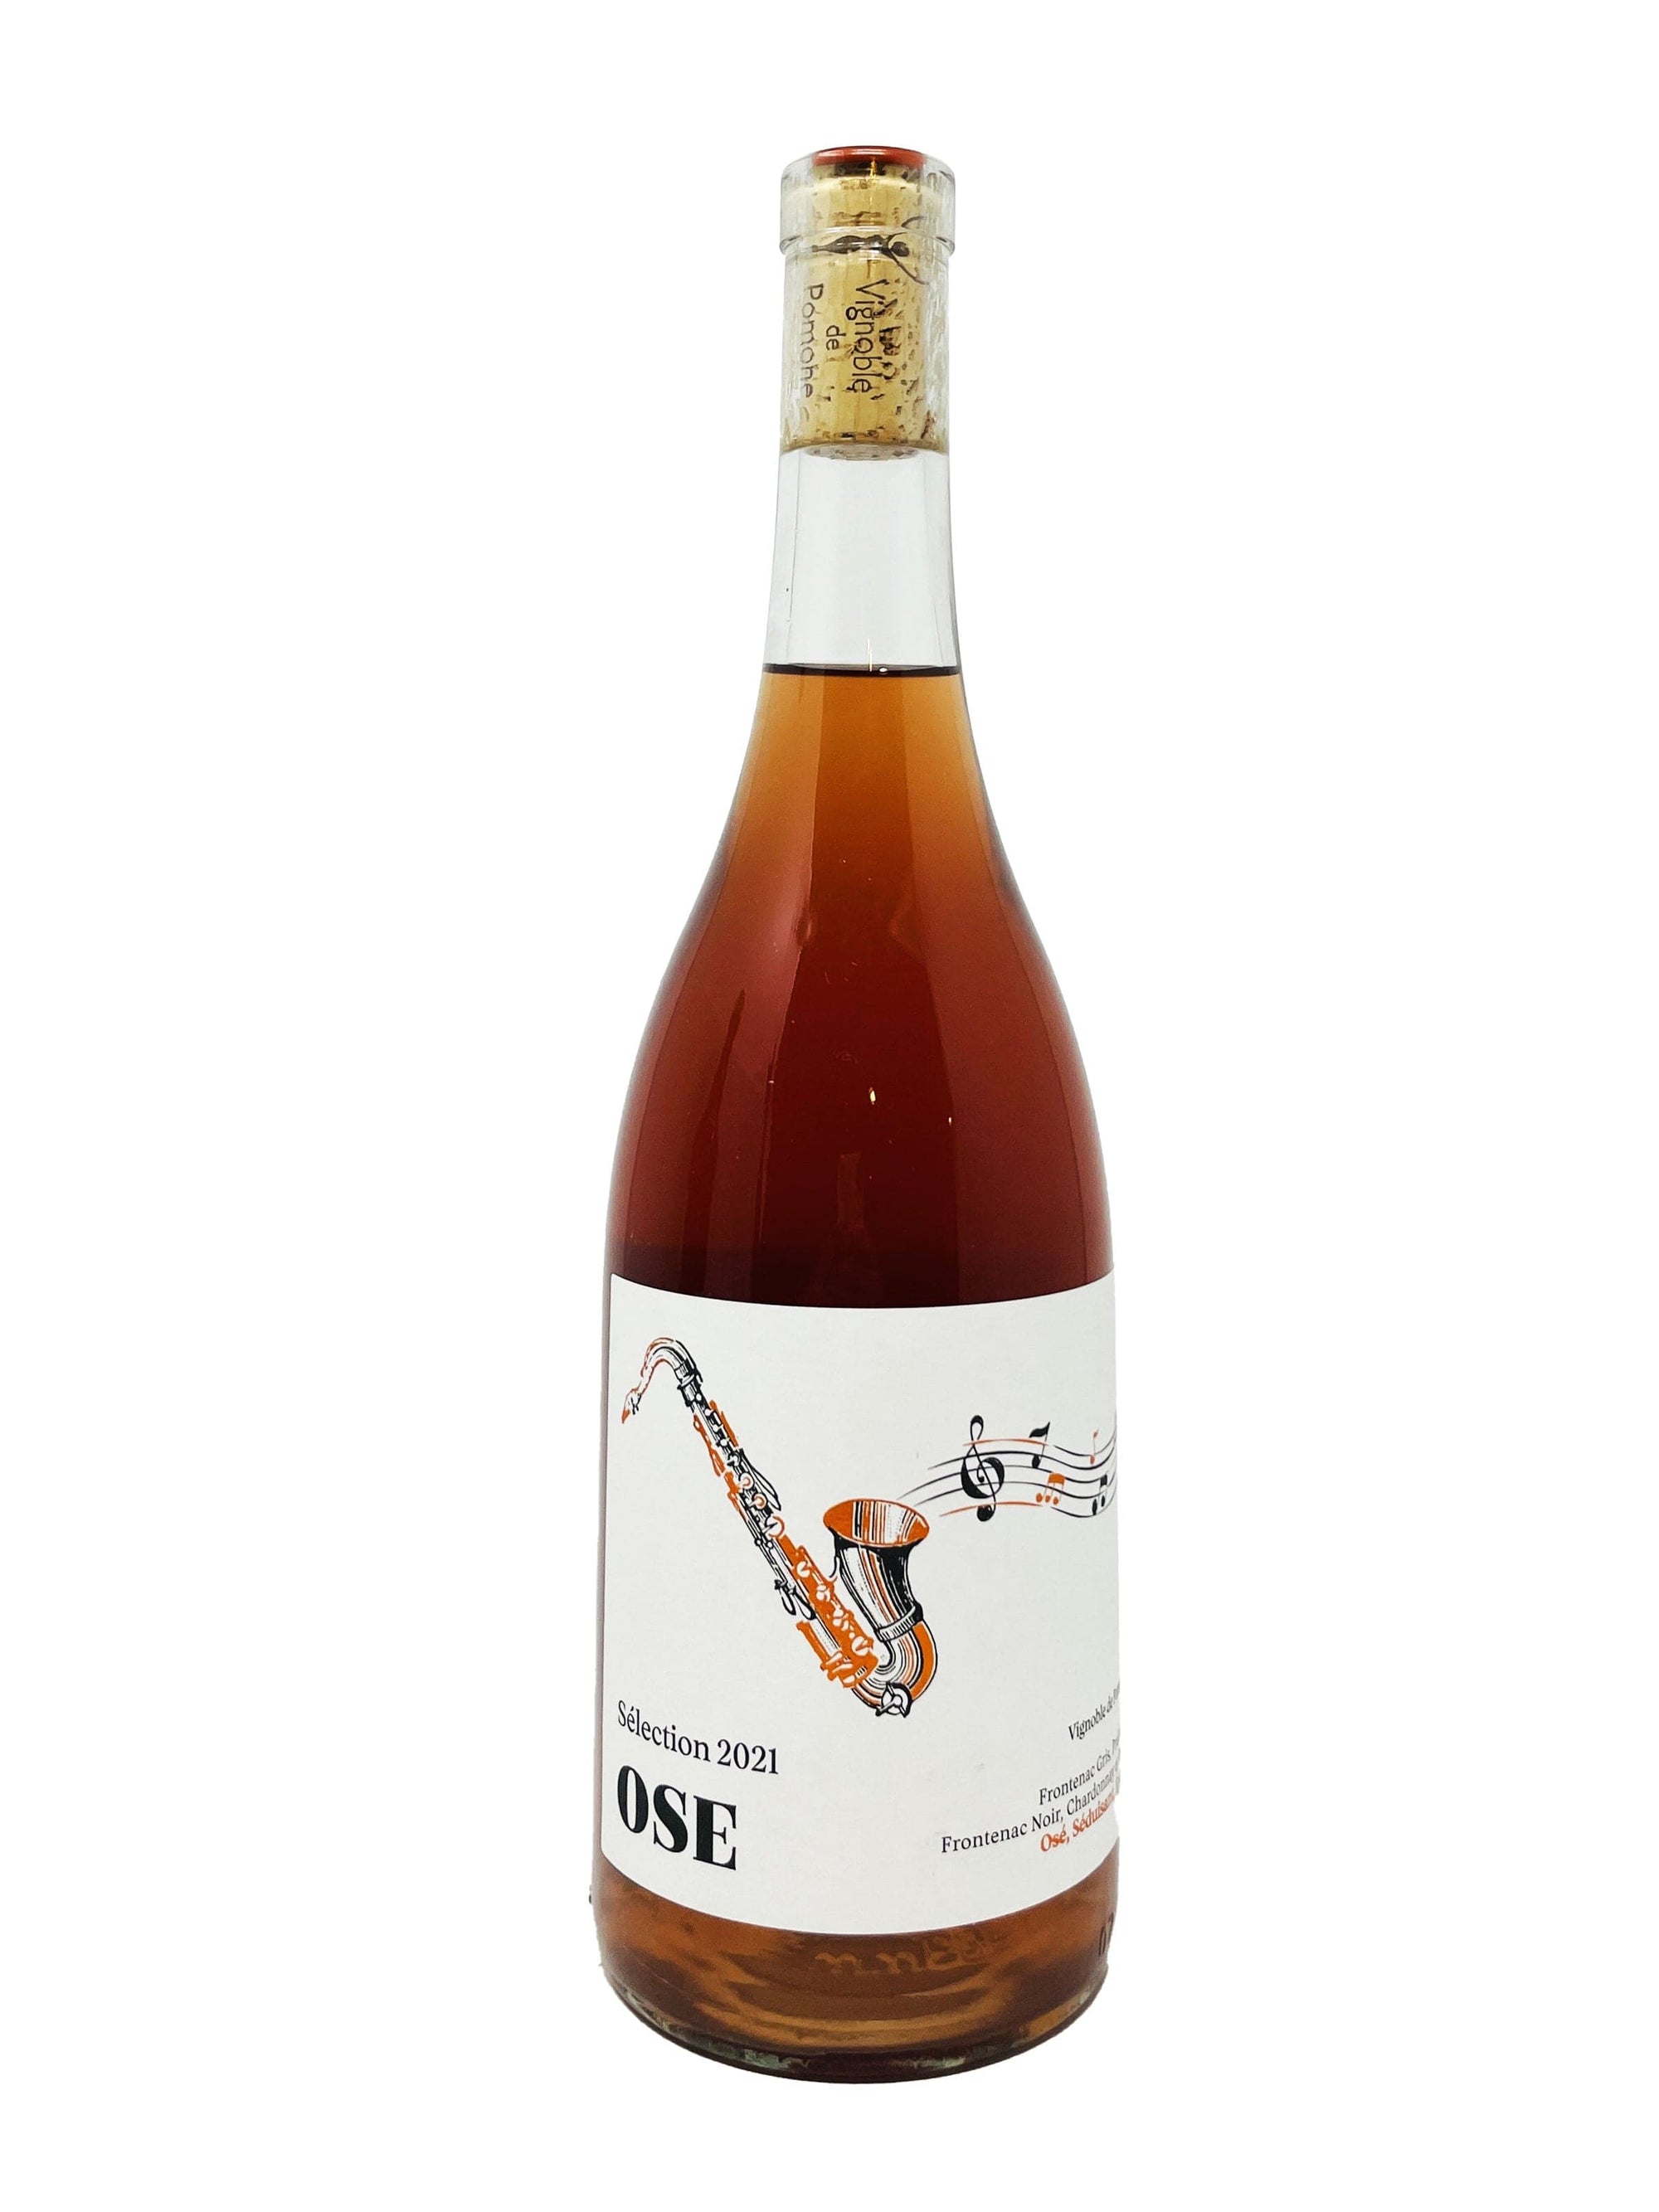 Vignoble de Pomone vin OSE 2021 - Vin orange du Vignoble de Pomone